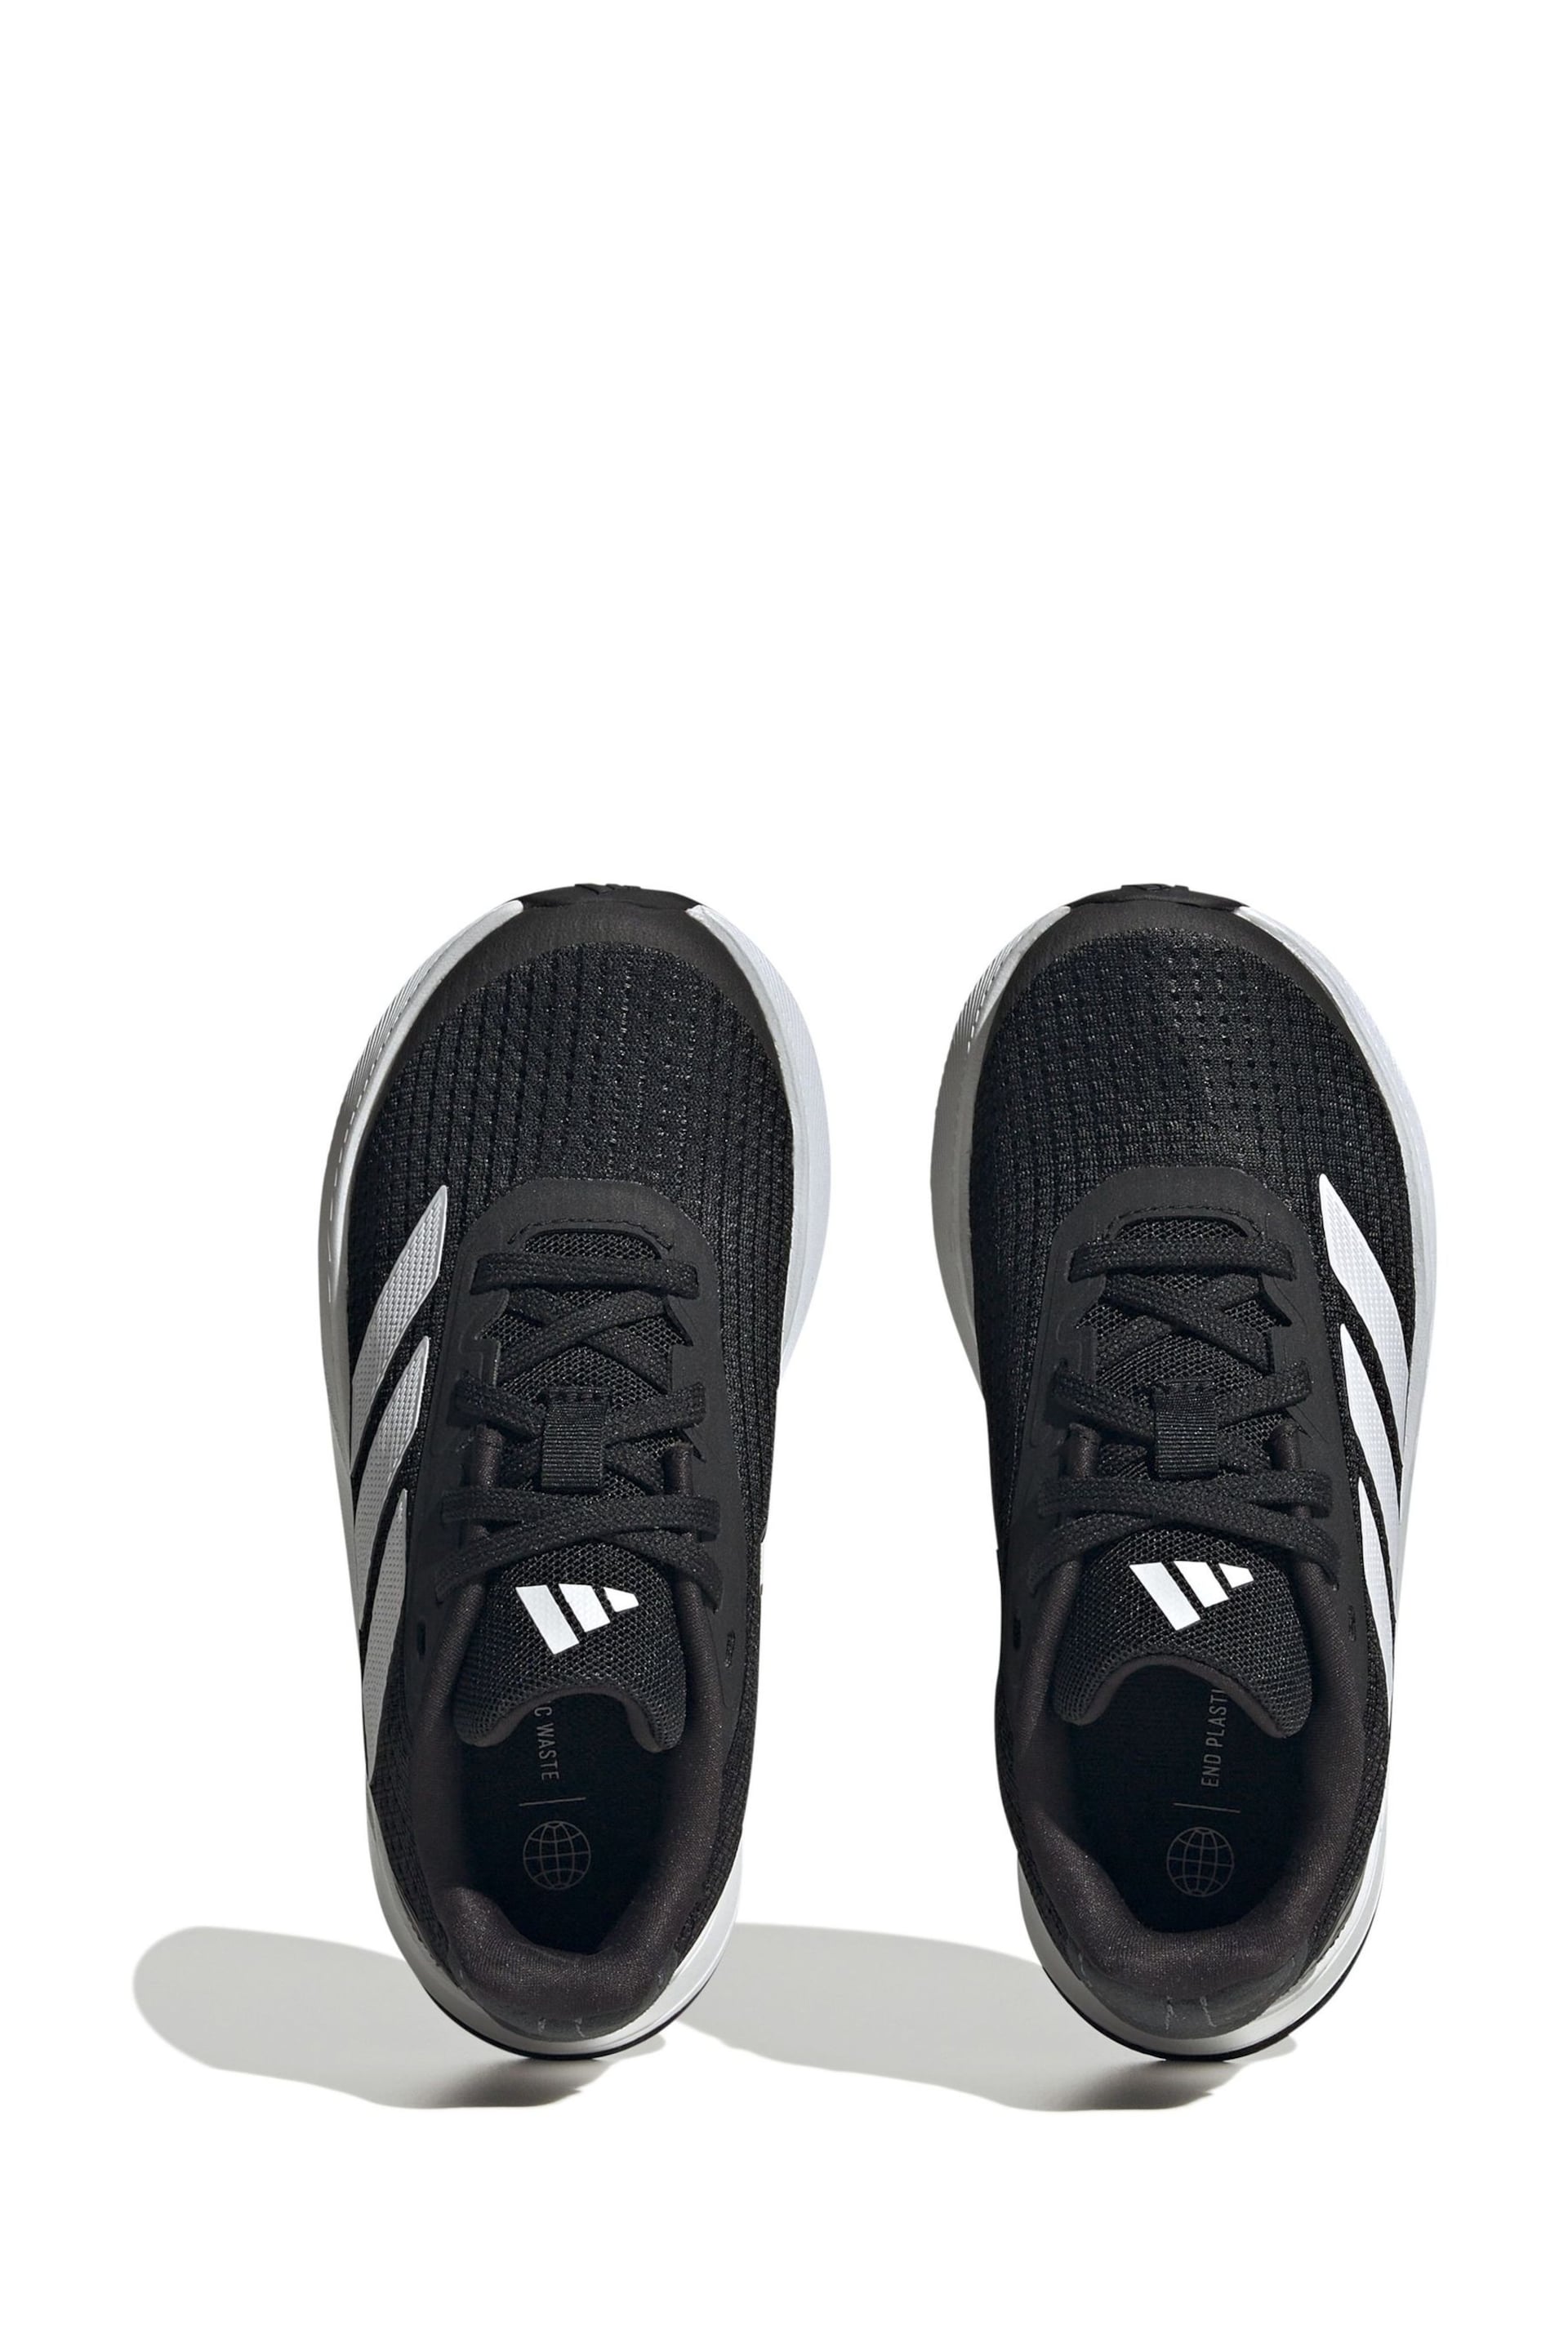 adidas Black/White Kids Duramo Shoes - Image 6 of 7